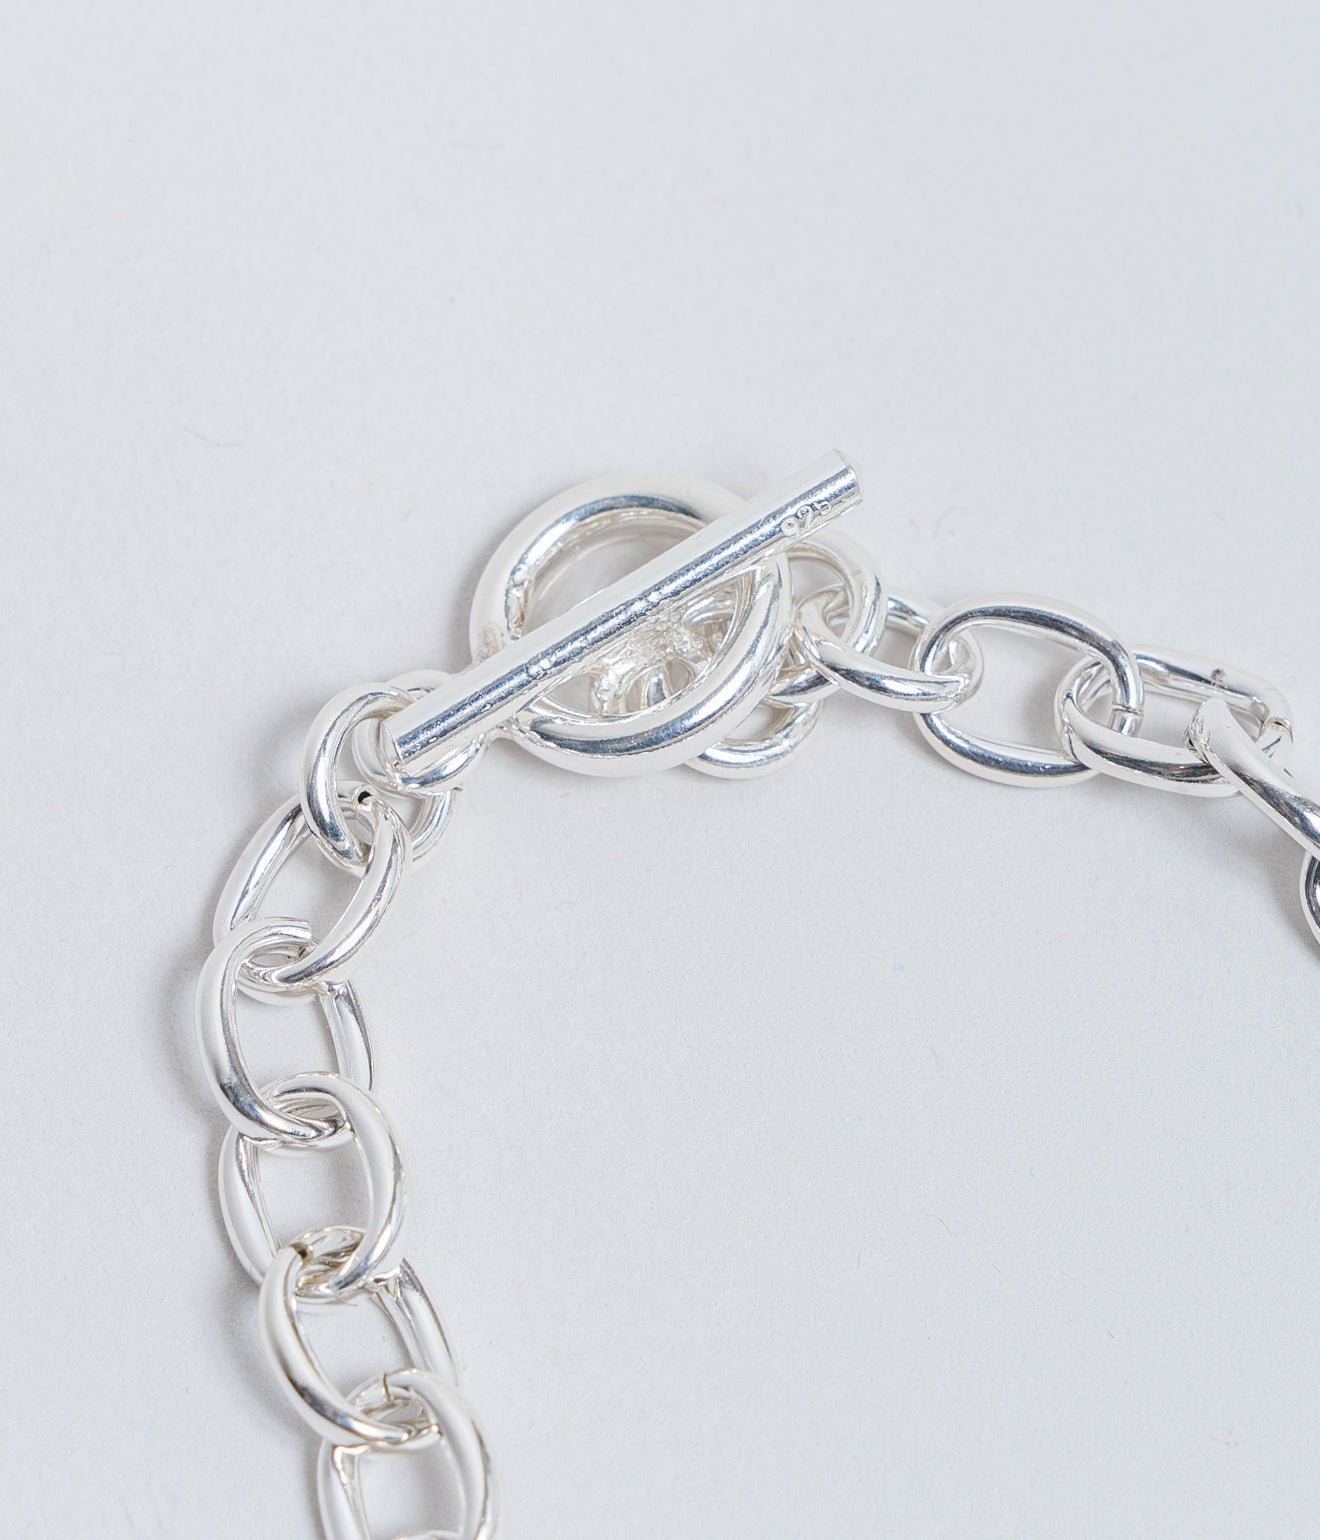 Mexican Jewelry Bracelet "PU006" - WEAREALLANIMALS